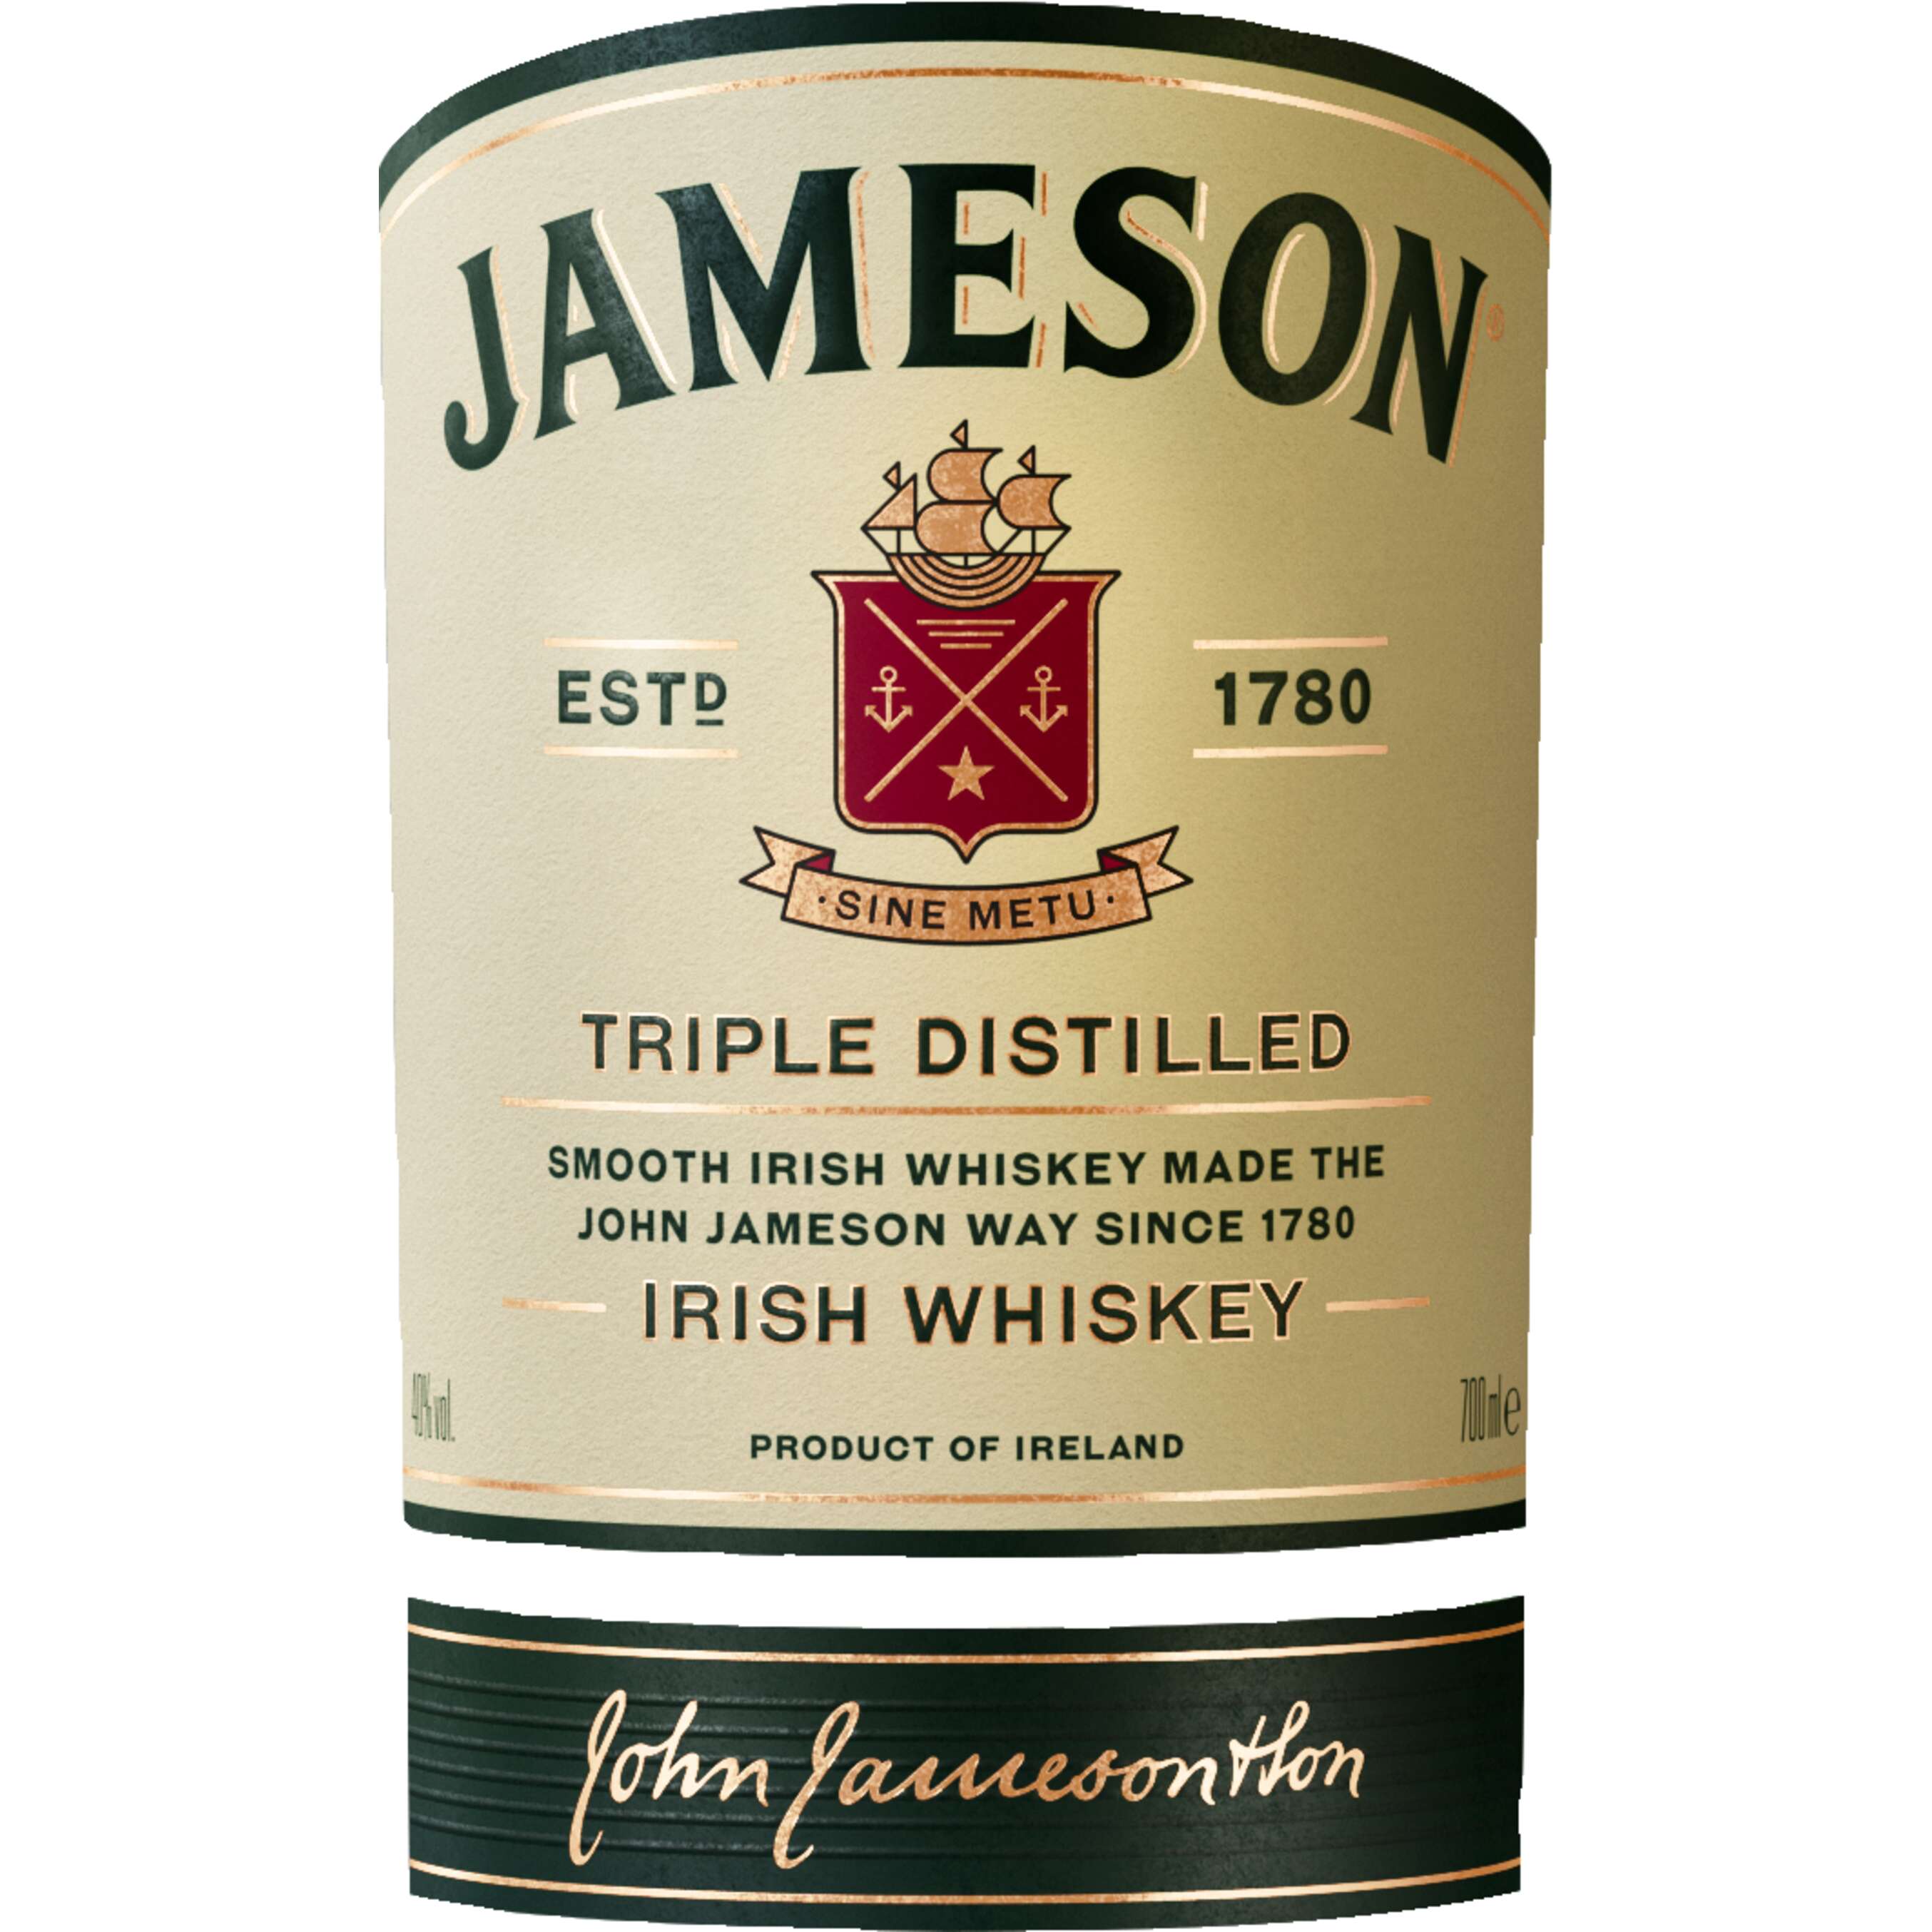 Изображение за продукта Jameson Ирландско уиски